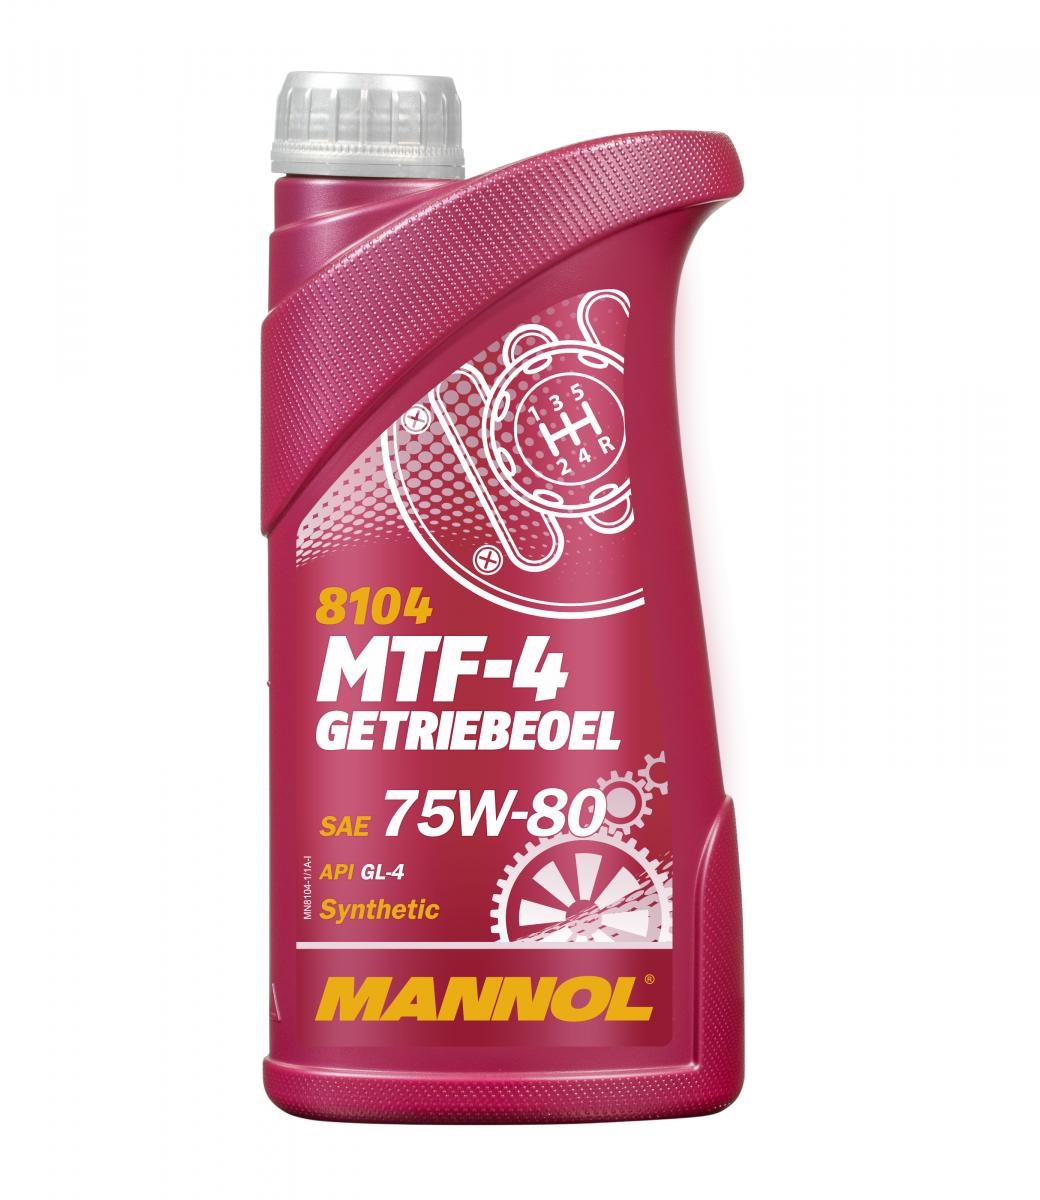 MANNOL MTF-4, GL-4 MN8104-1 WANGYE Getriebeöl Motorrad zum günstigen Preis